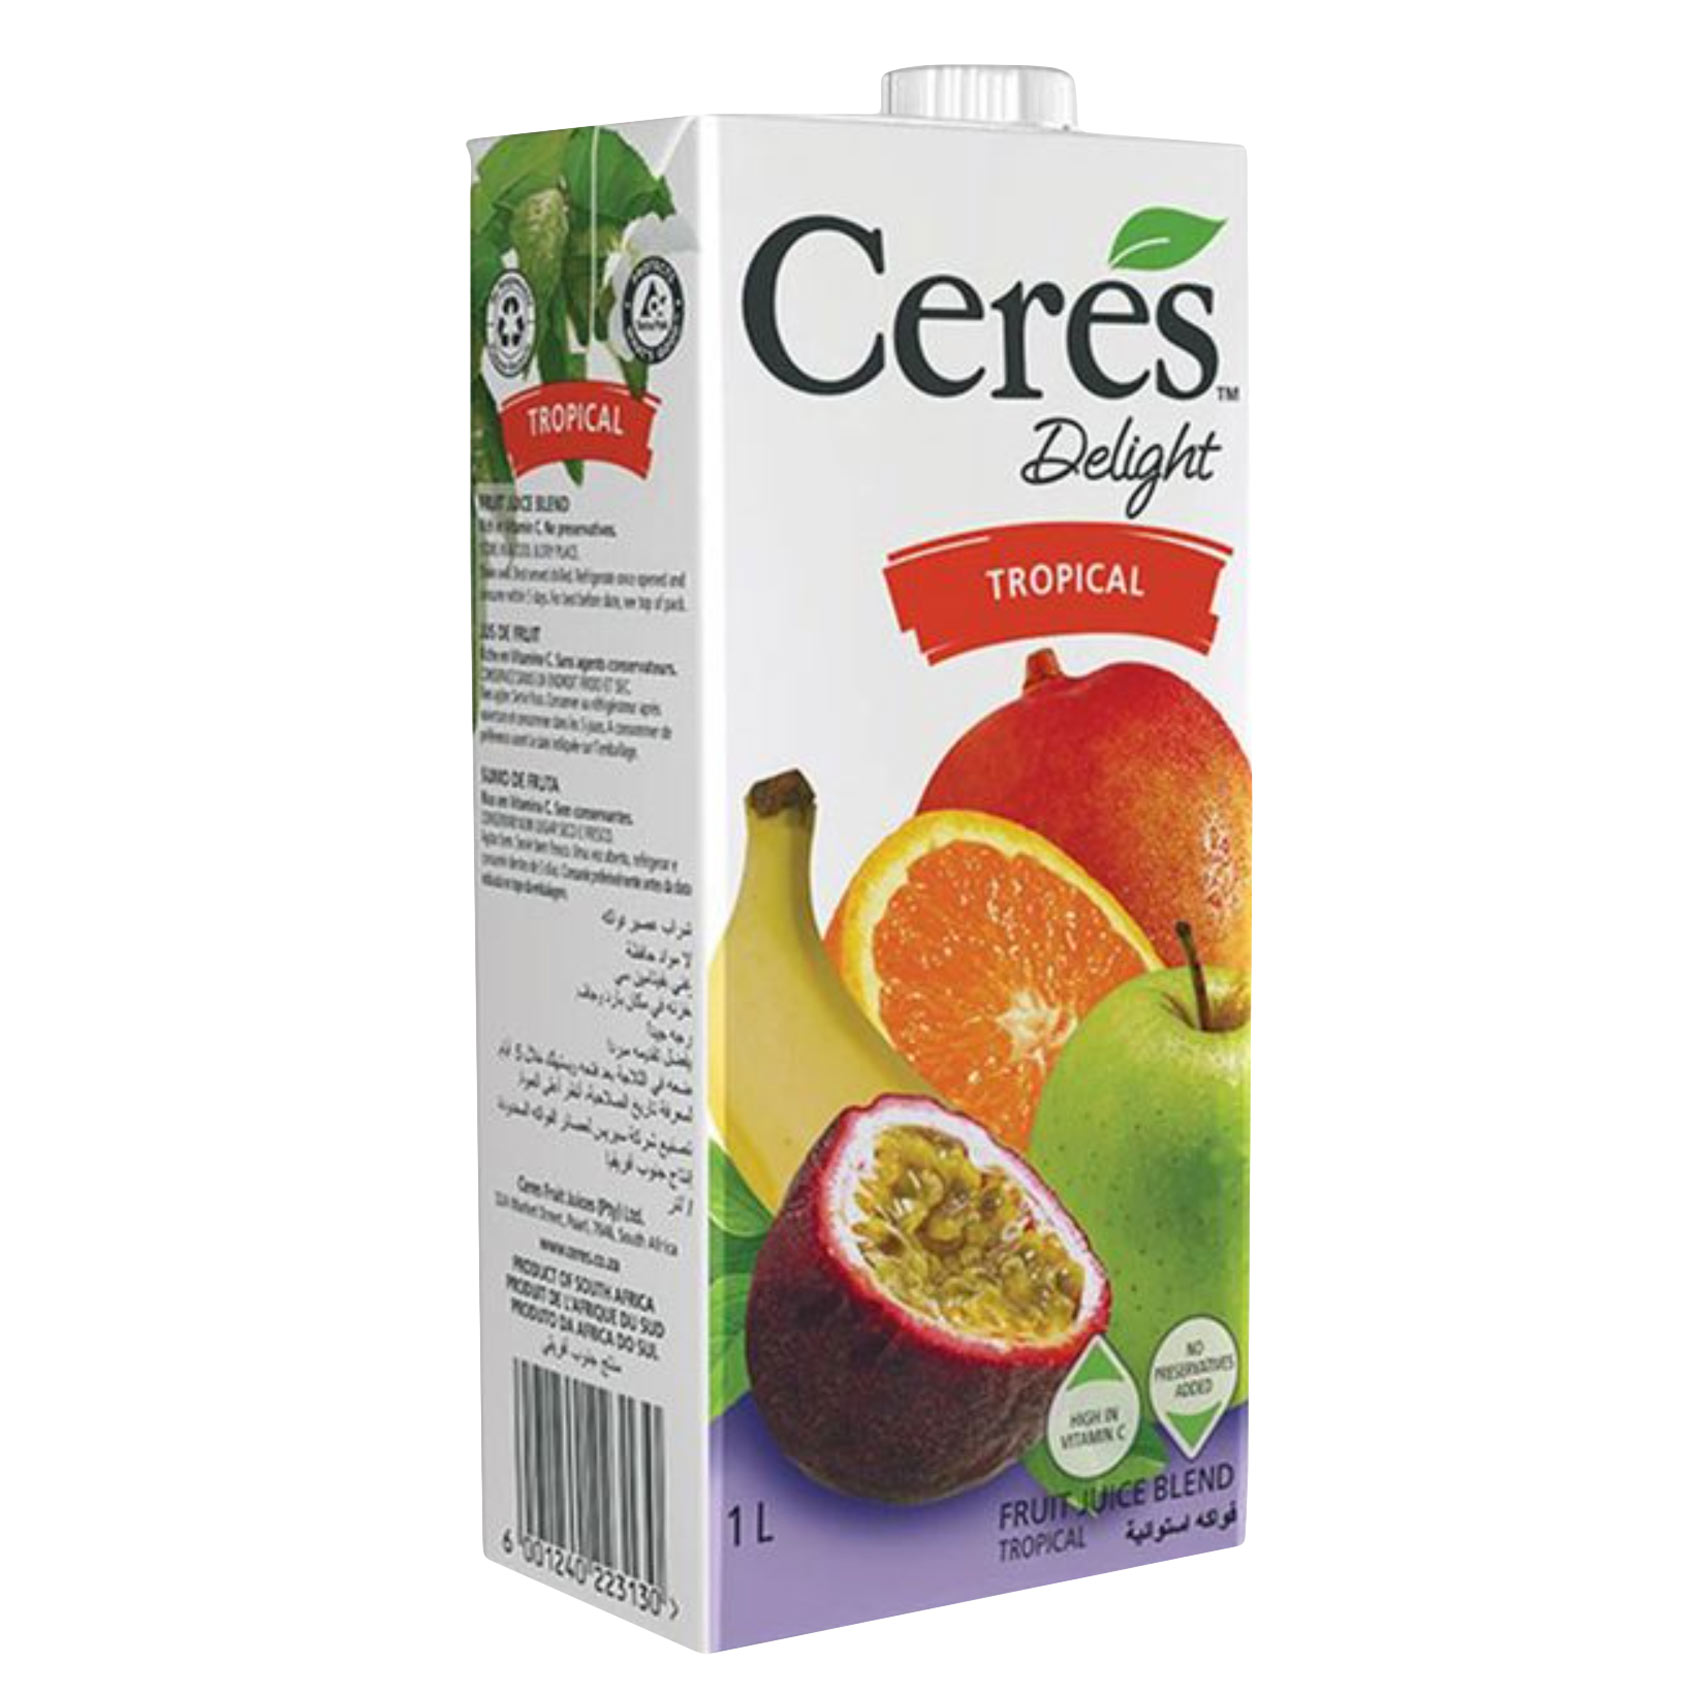 Ceres Delight Tropical Juice 1L